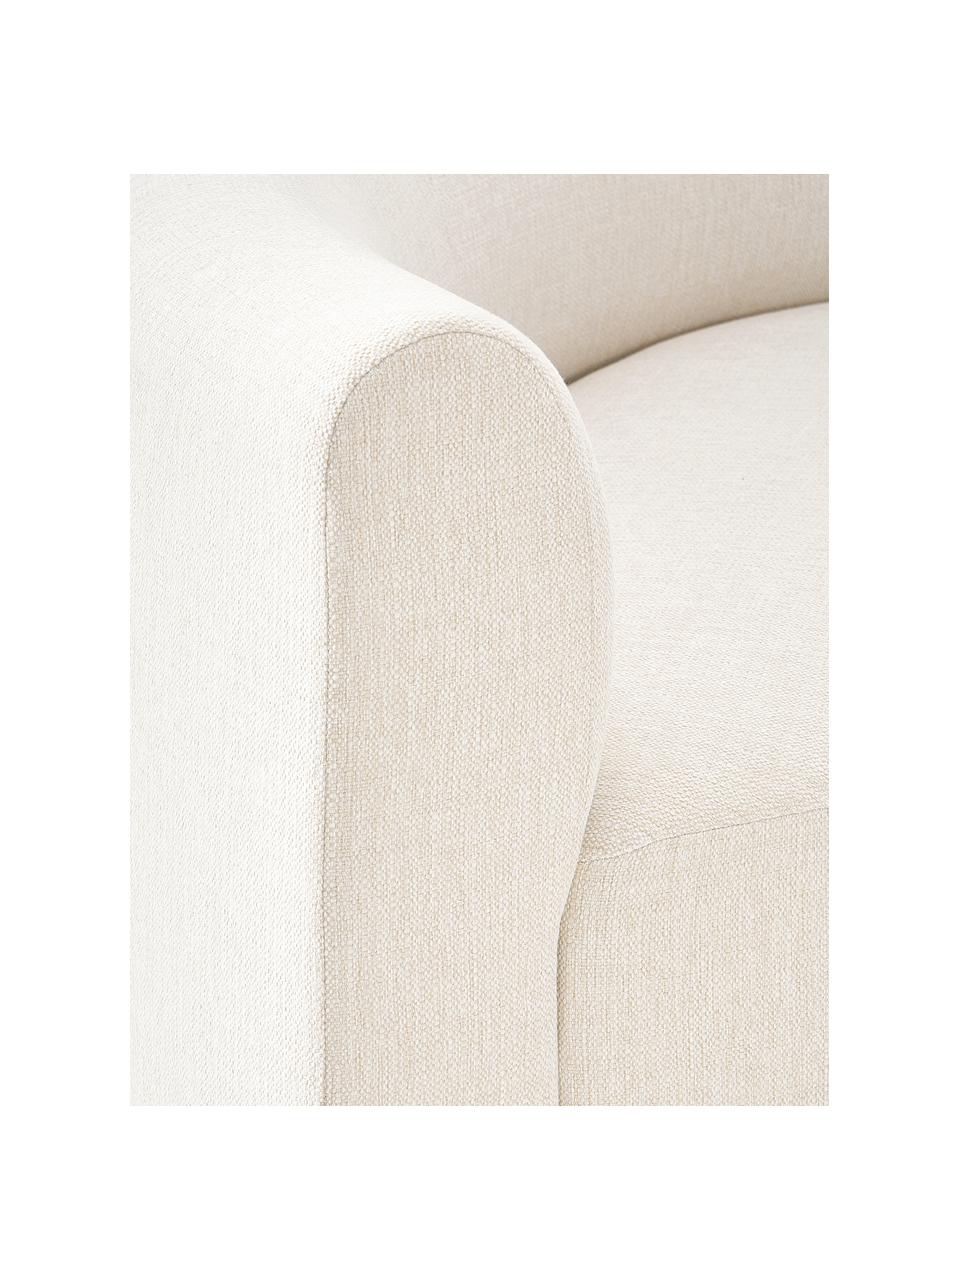 Module d'angle arrondi Sofia, Tissu blanc crème, larg. 138 x prof. 138 cm